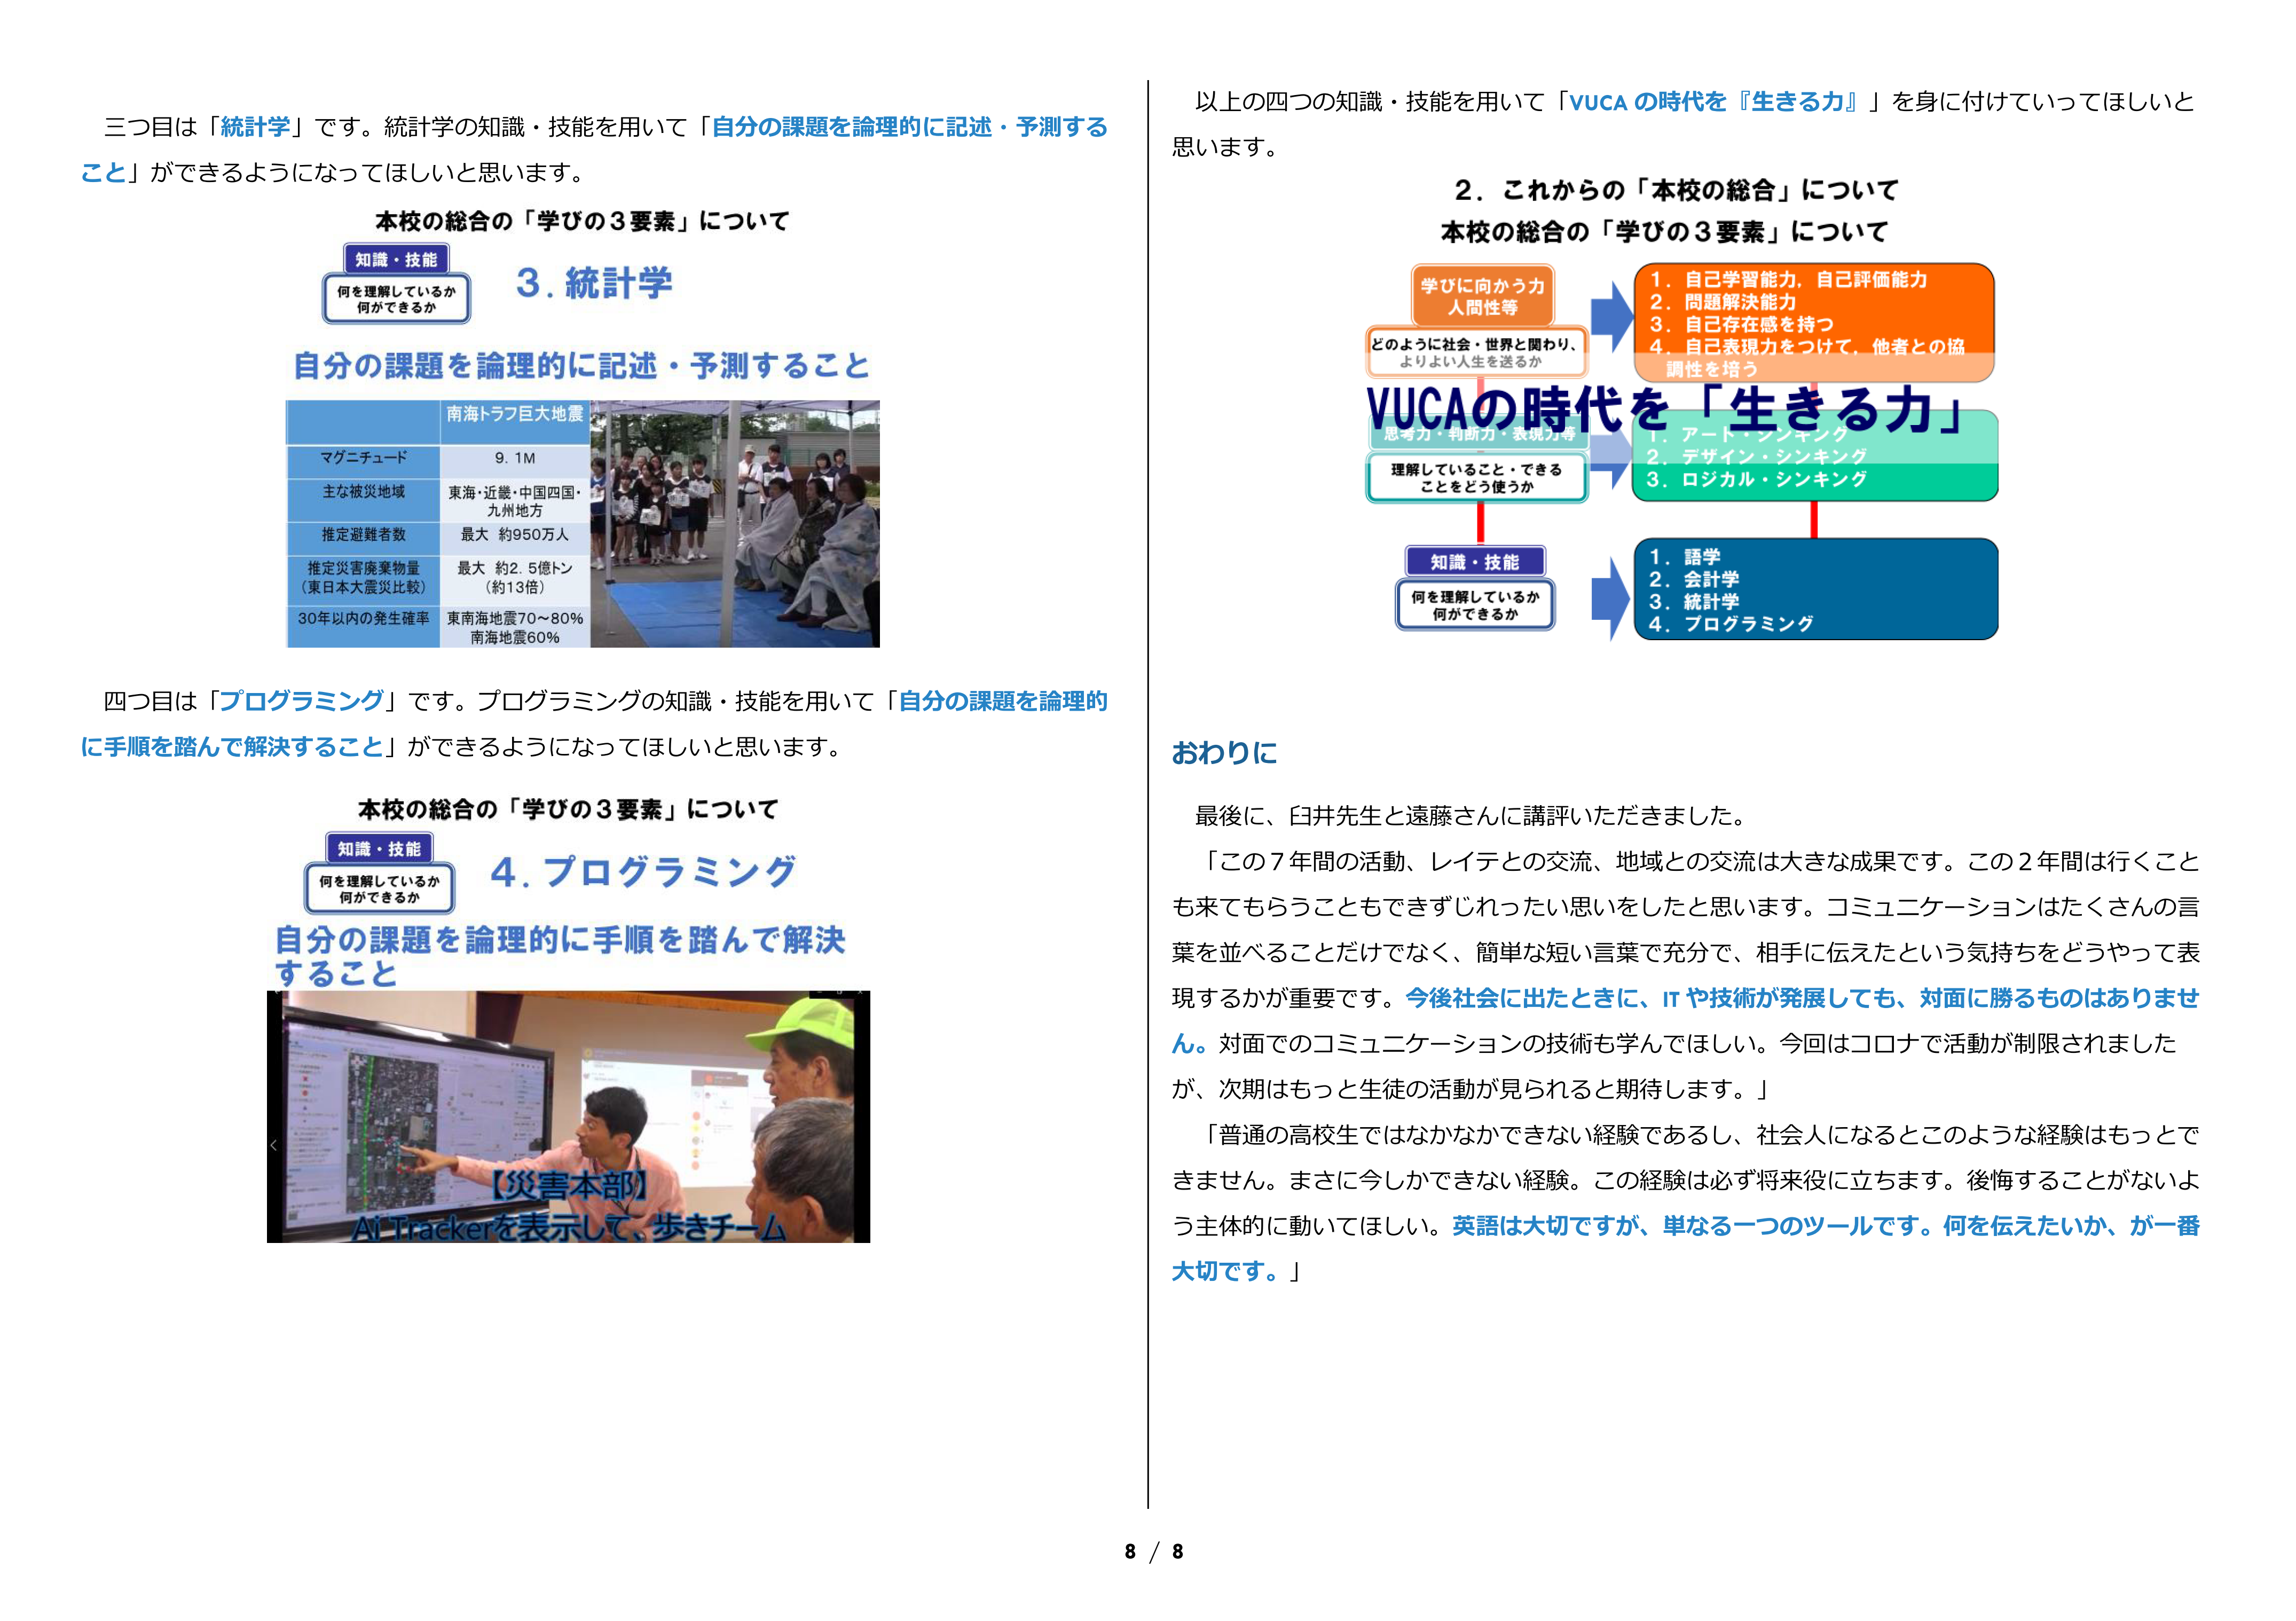 http://www.shotoku.jp/gsh/news/18%E5%8F%B7_%E6%9C%80%E7%B5%82%E5%A0%B1%E5%91%8A%E4%BC%9A_08.png